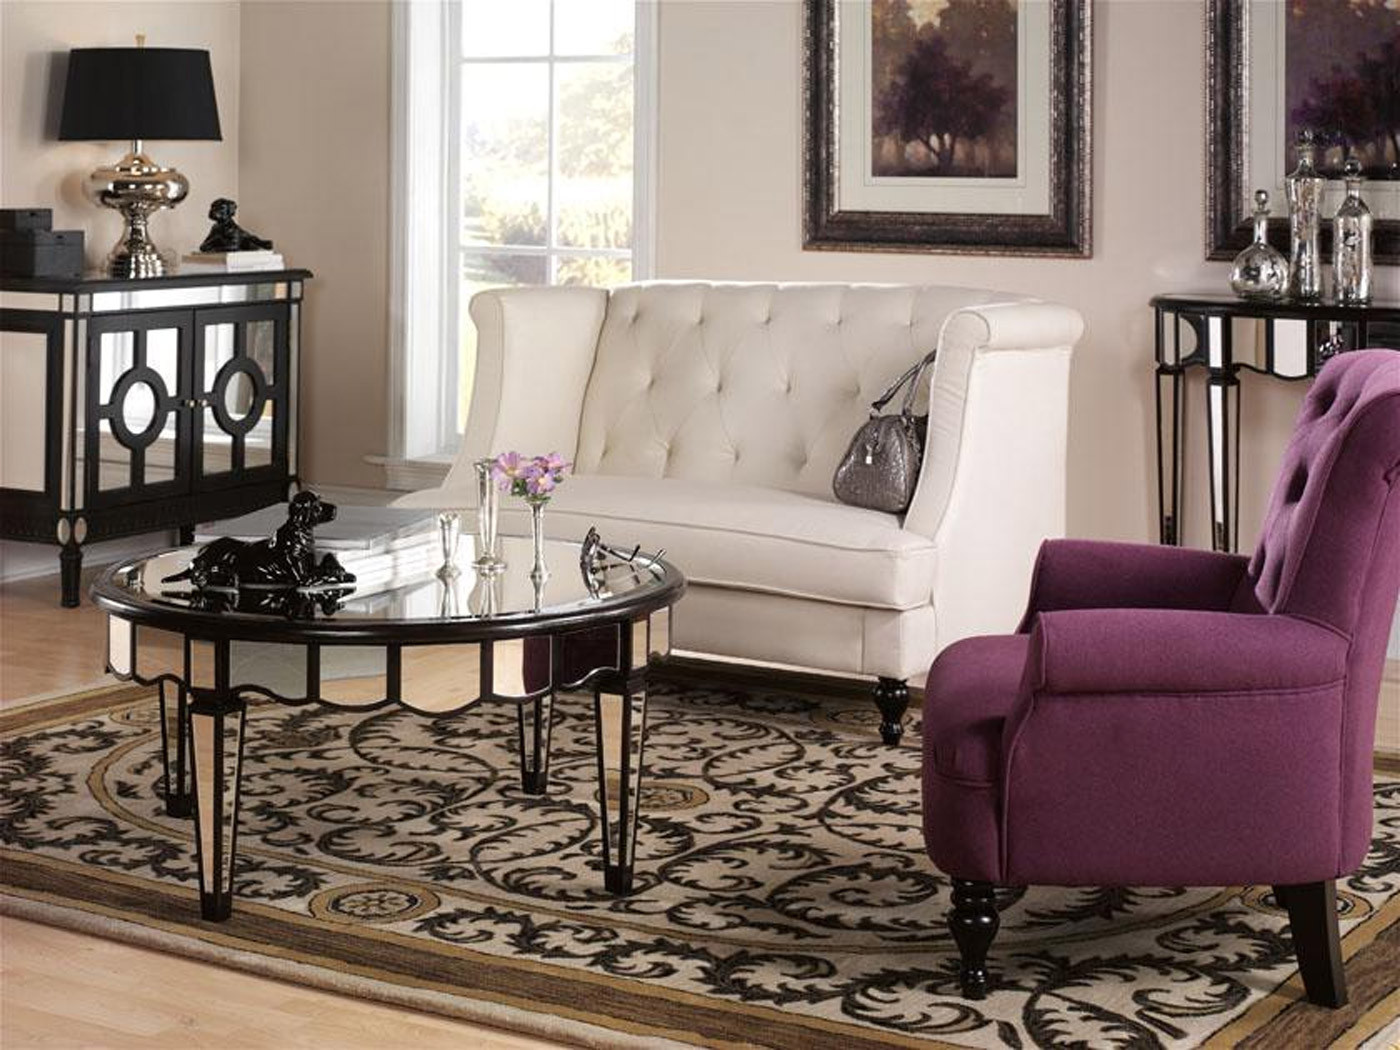 Modern White Living Room Furniture
 Find Suitable Living Room Furniture With Your Style